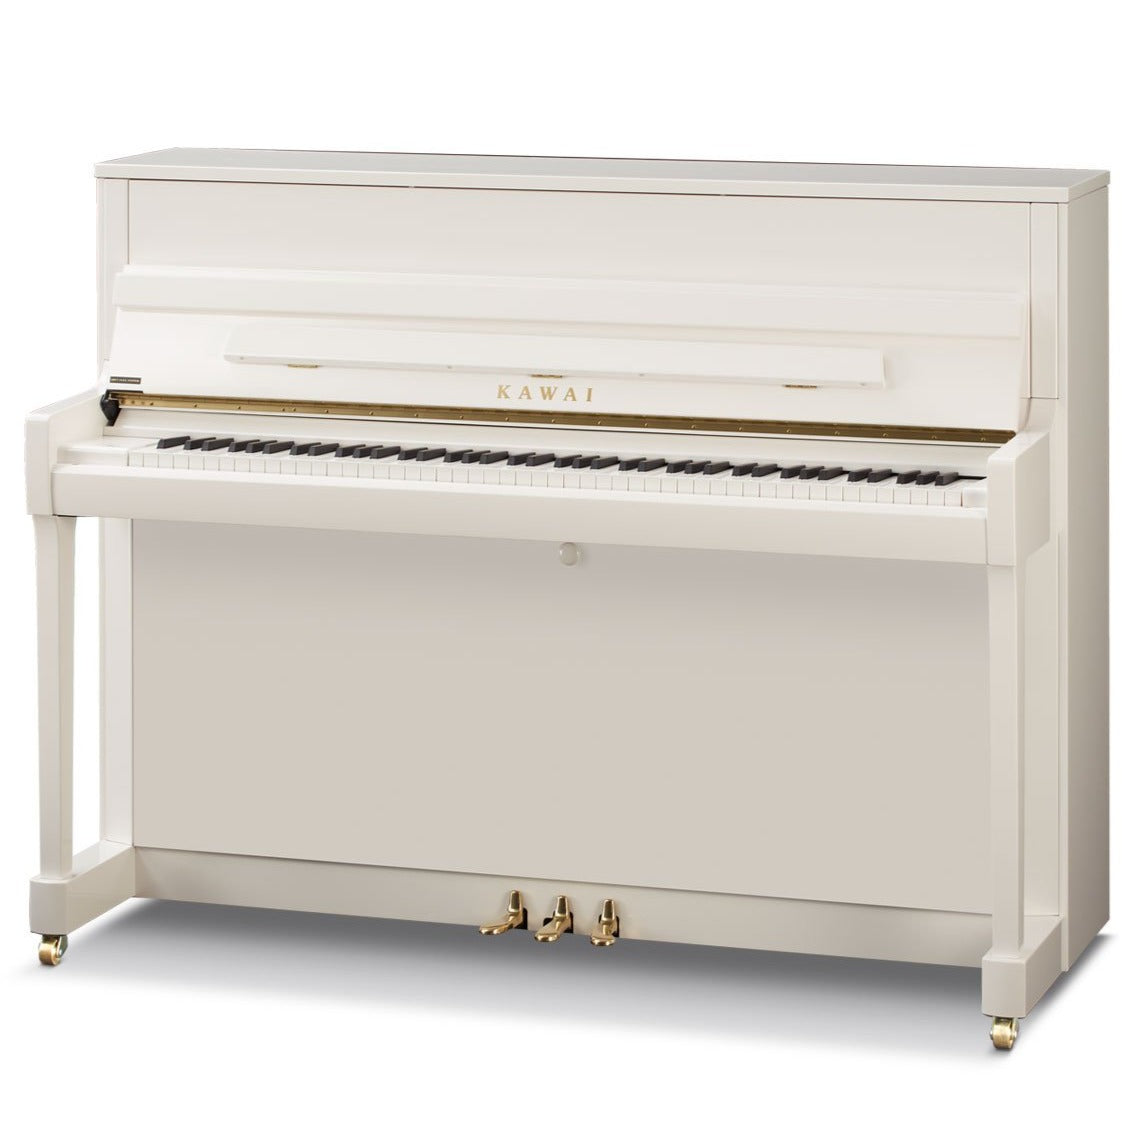 KAWAI K-200 UPRIGHT PIANO WHITE POLISH (114CM) W/BENCH (MII), KAWAI, ACOUSTIC PIANO, kawai-acoustic-piano-k200-wh, ZOSO MUSIC SDN BHD